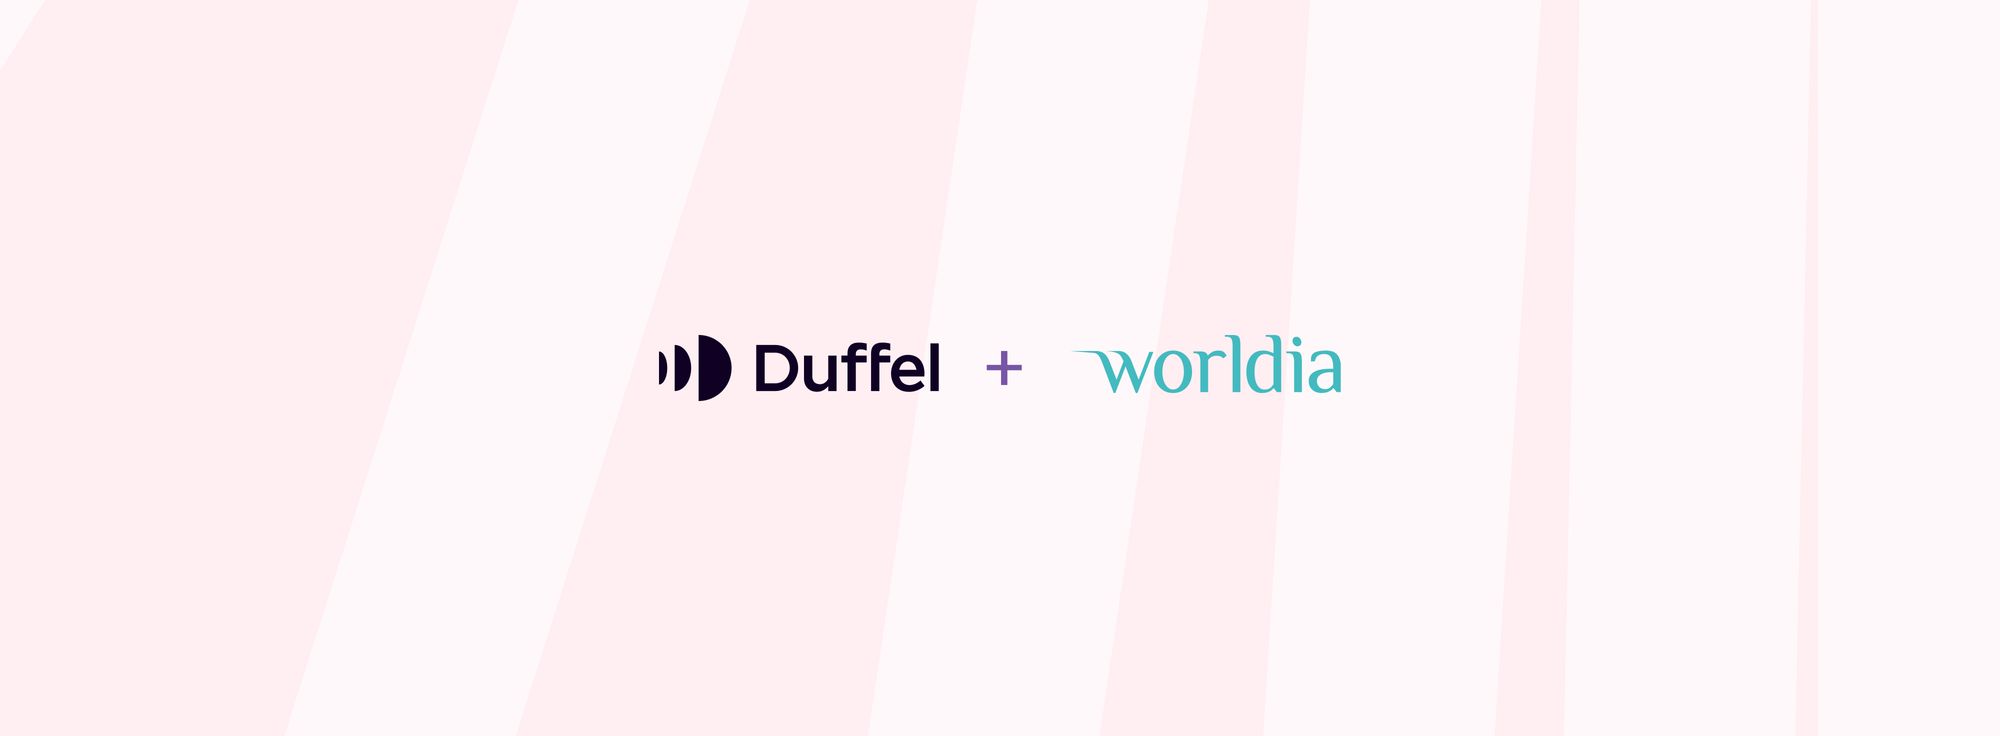 Three criteria Worldia used to select Duffel as their flights API provider